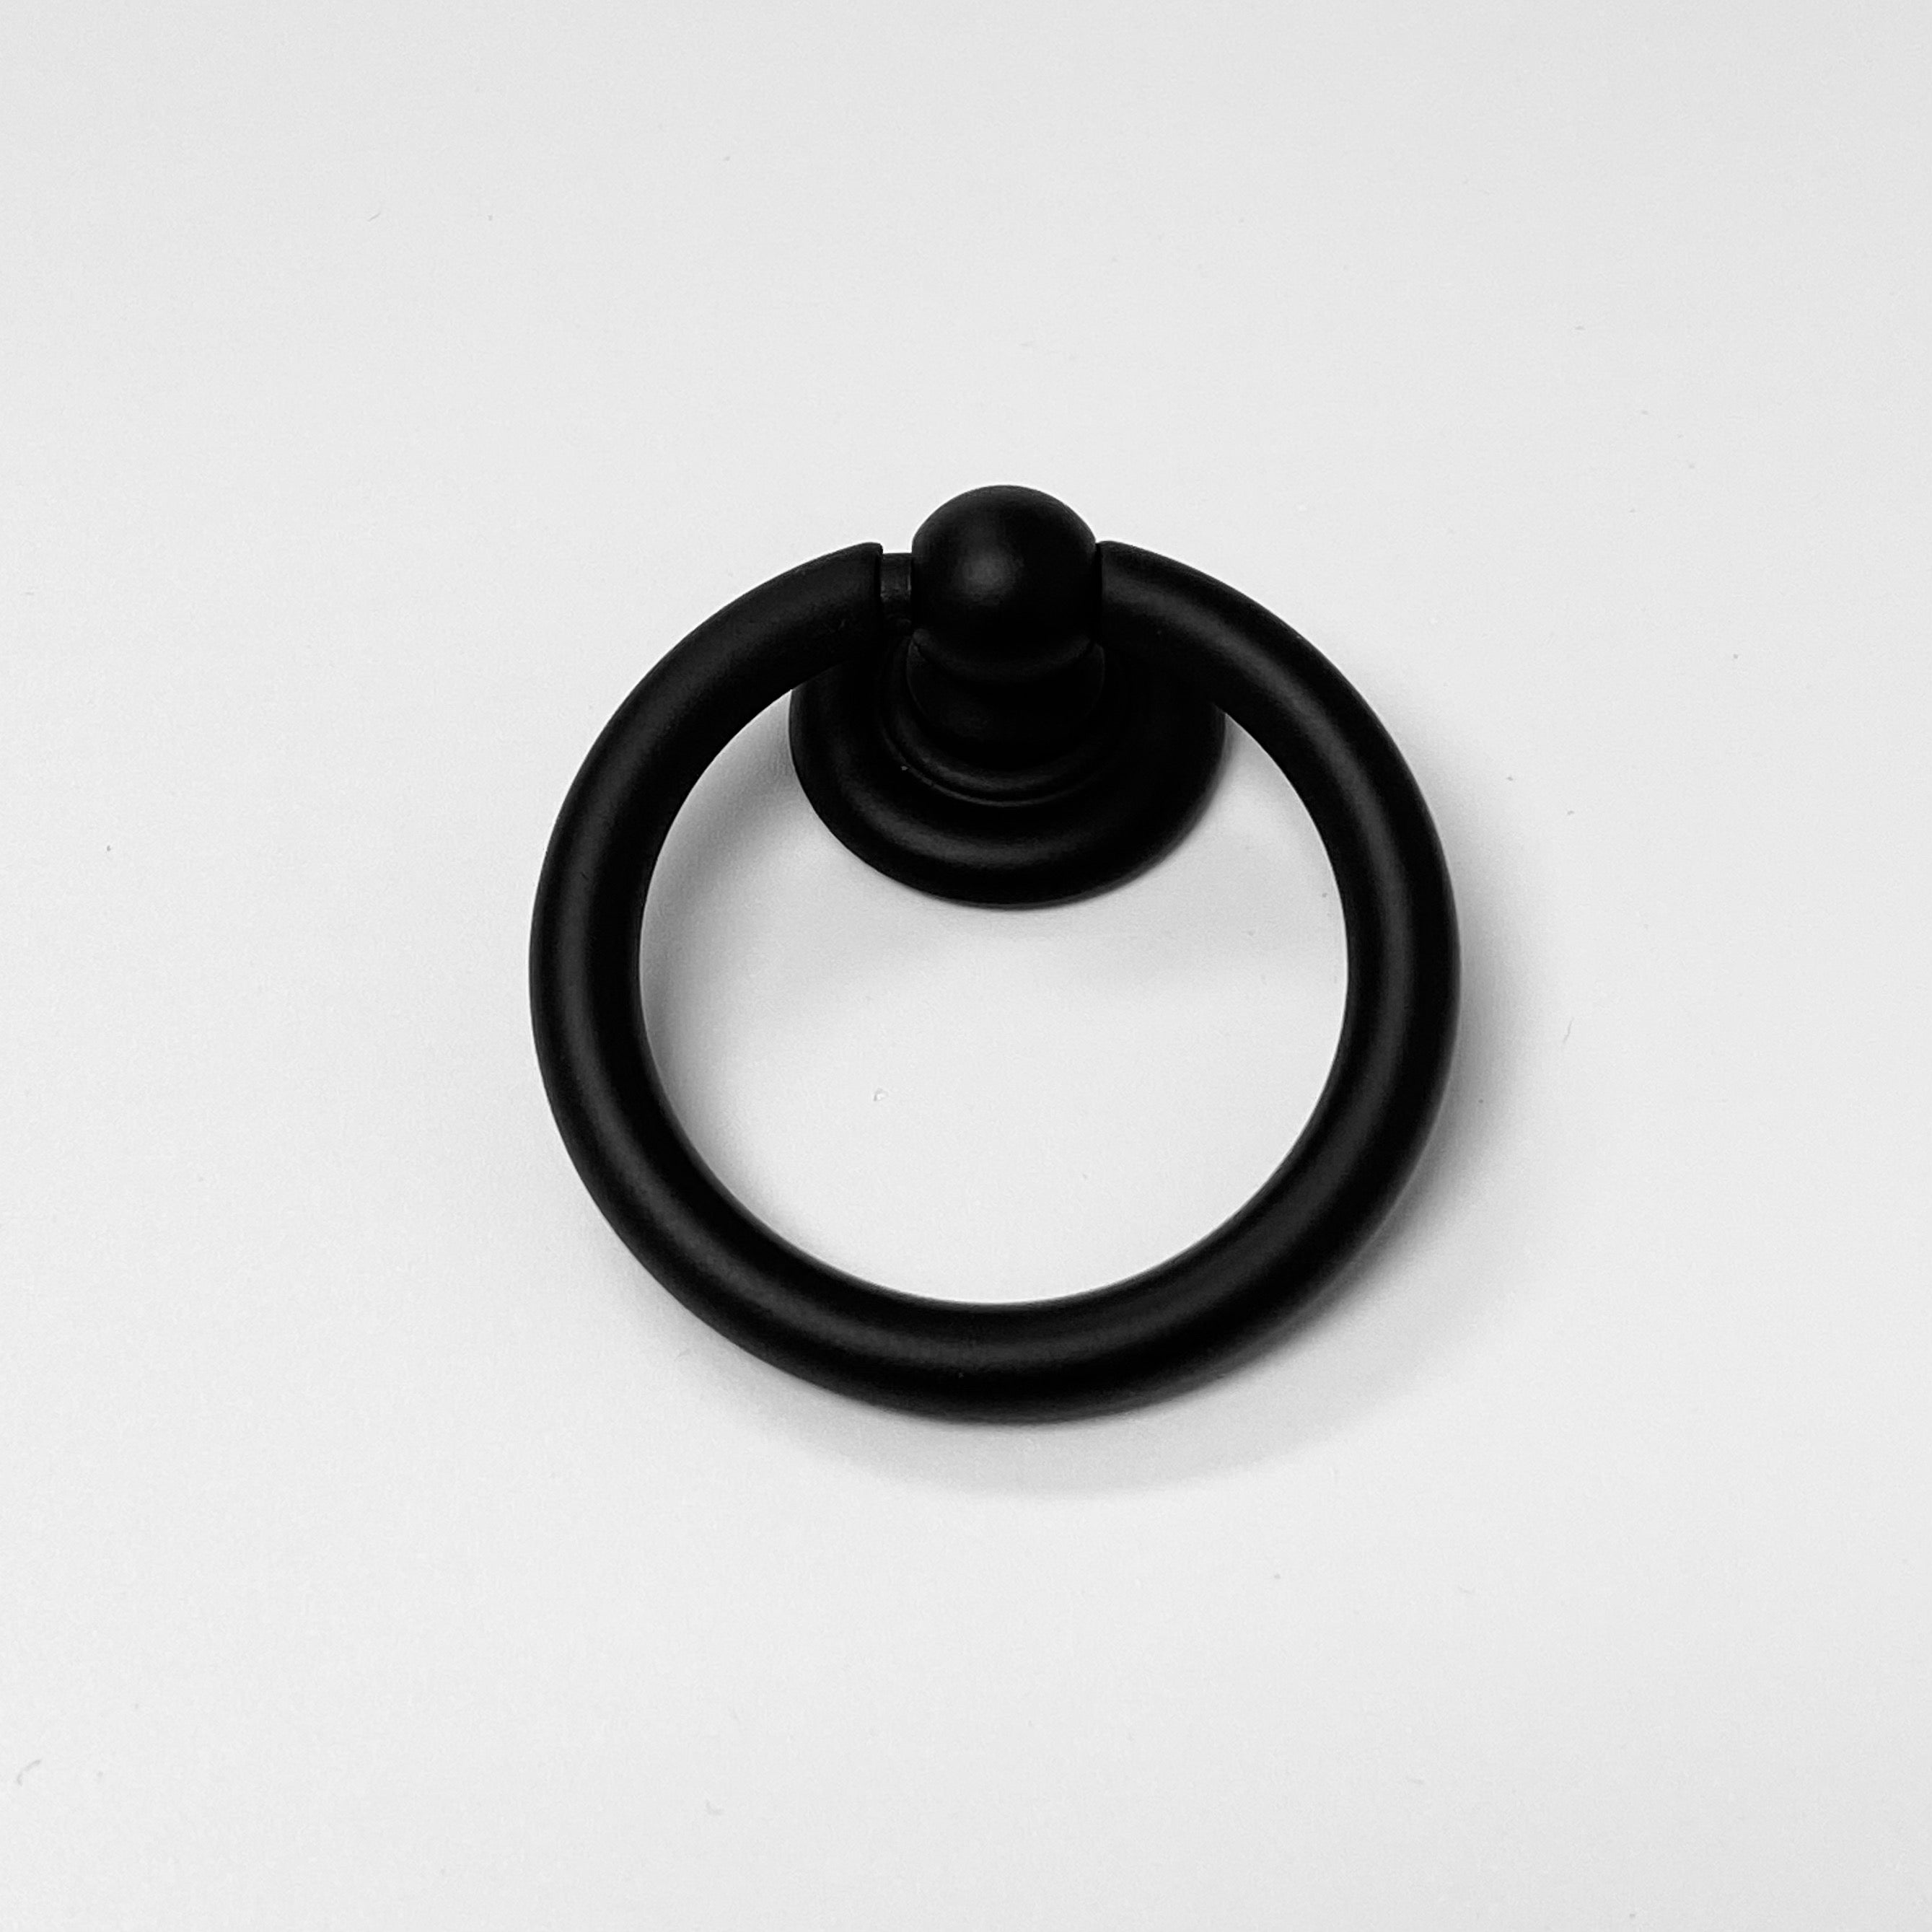 Matte Black "Capri" Cup Drawer Pull, Ring Pull or Round Cabinet Knob | Pulls